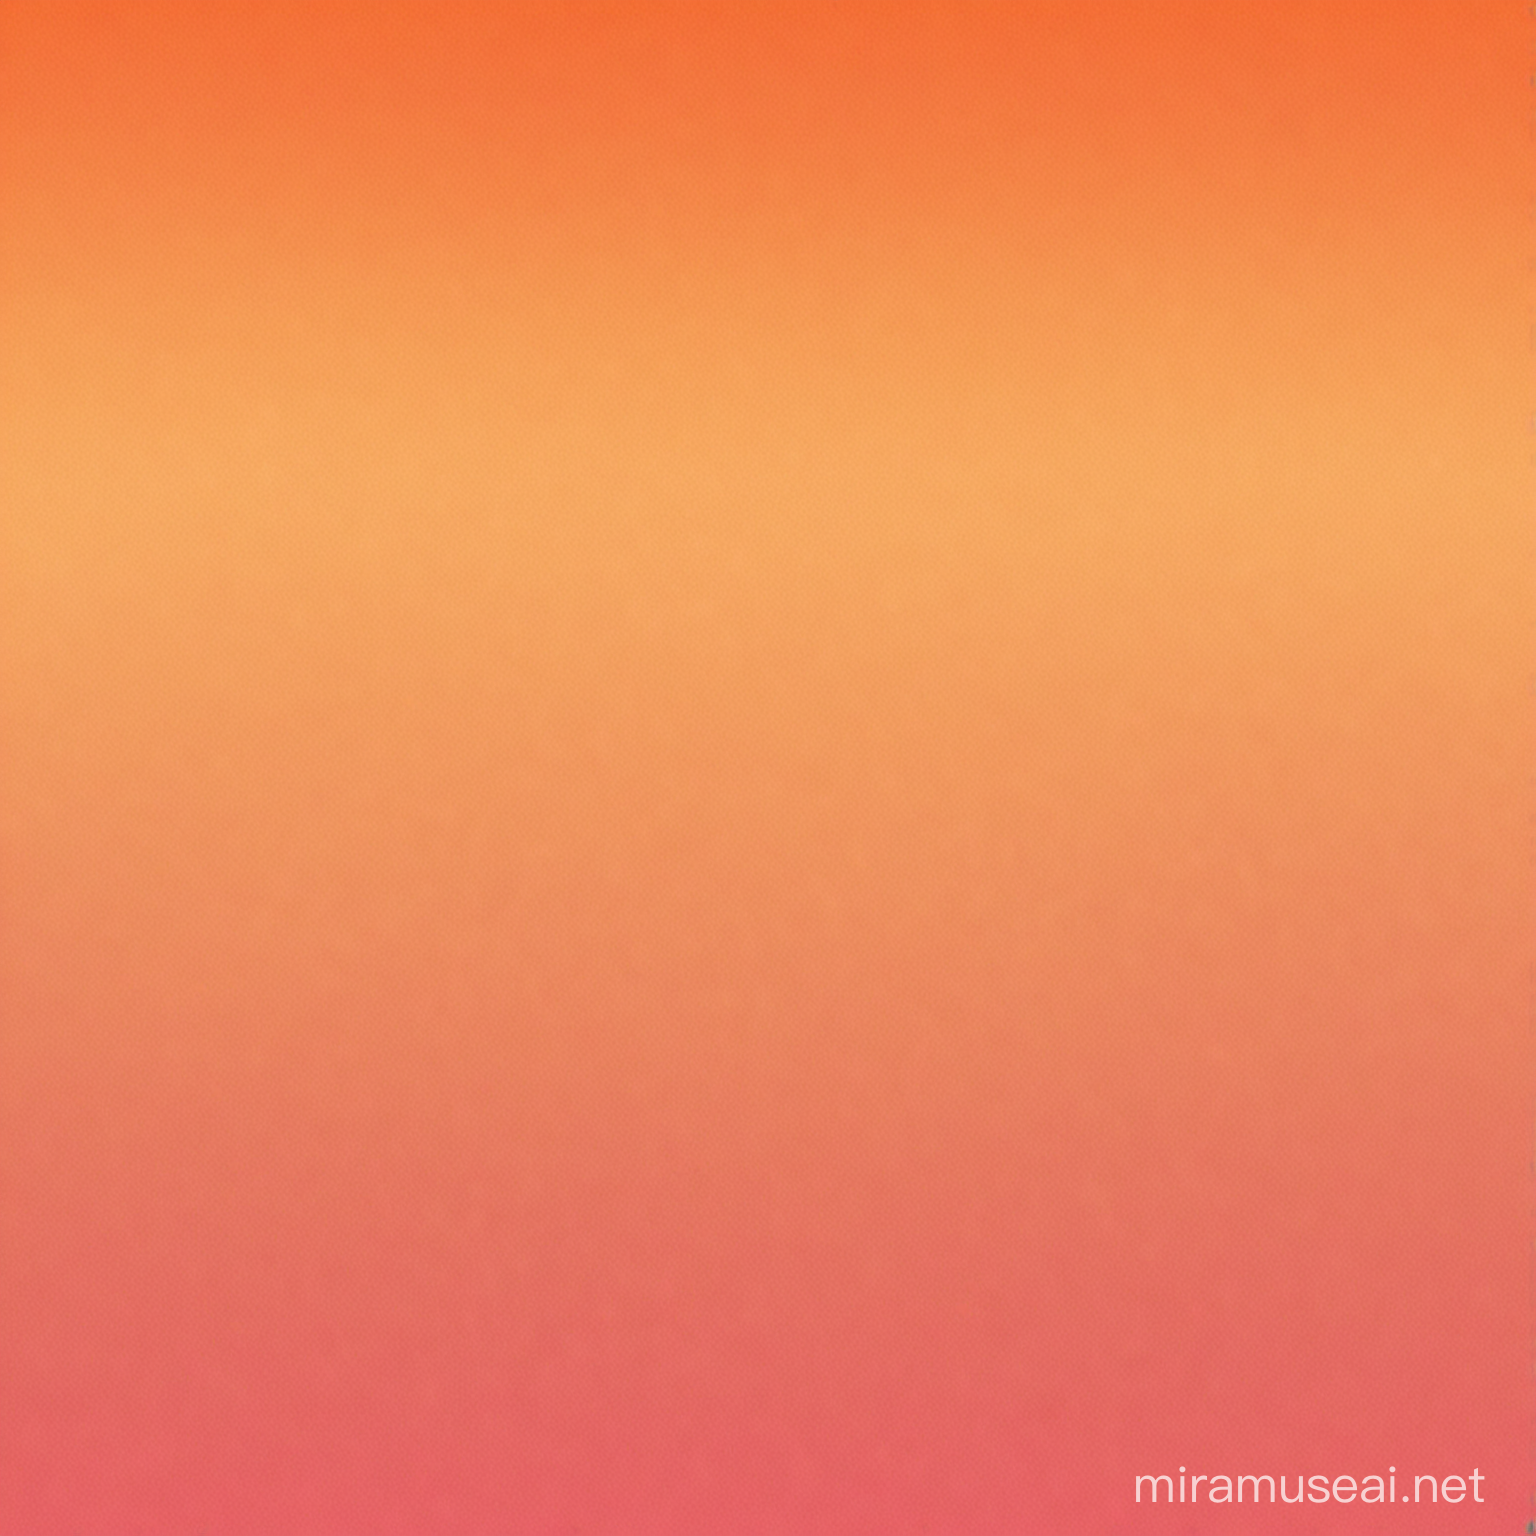 Vibrant Orange Gradient Background with Soft Blur